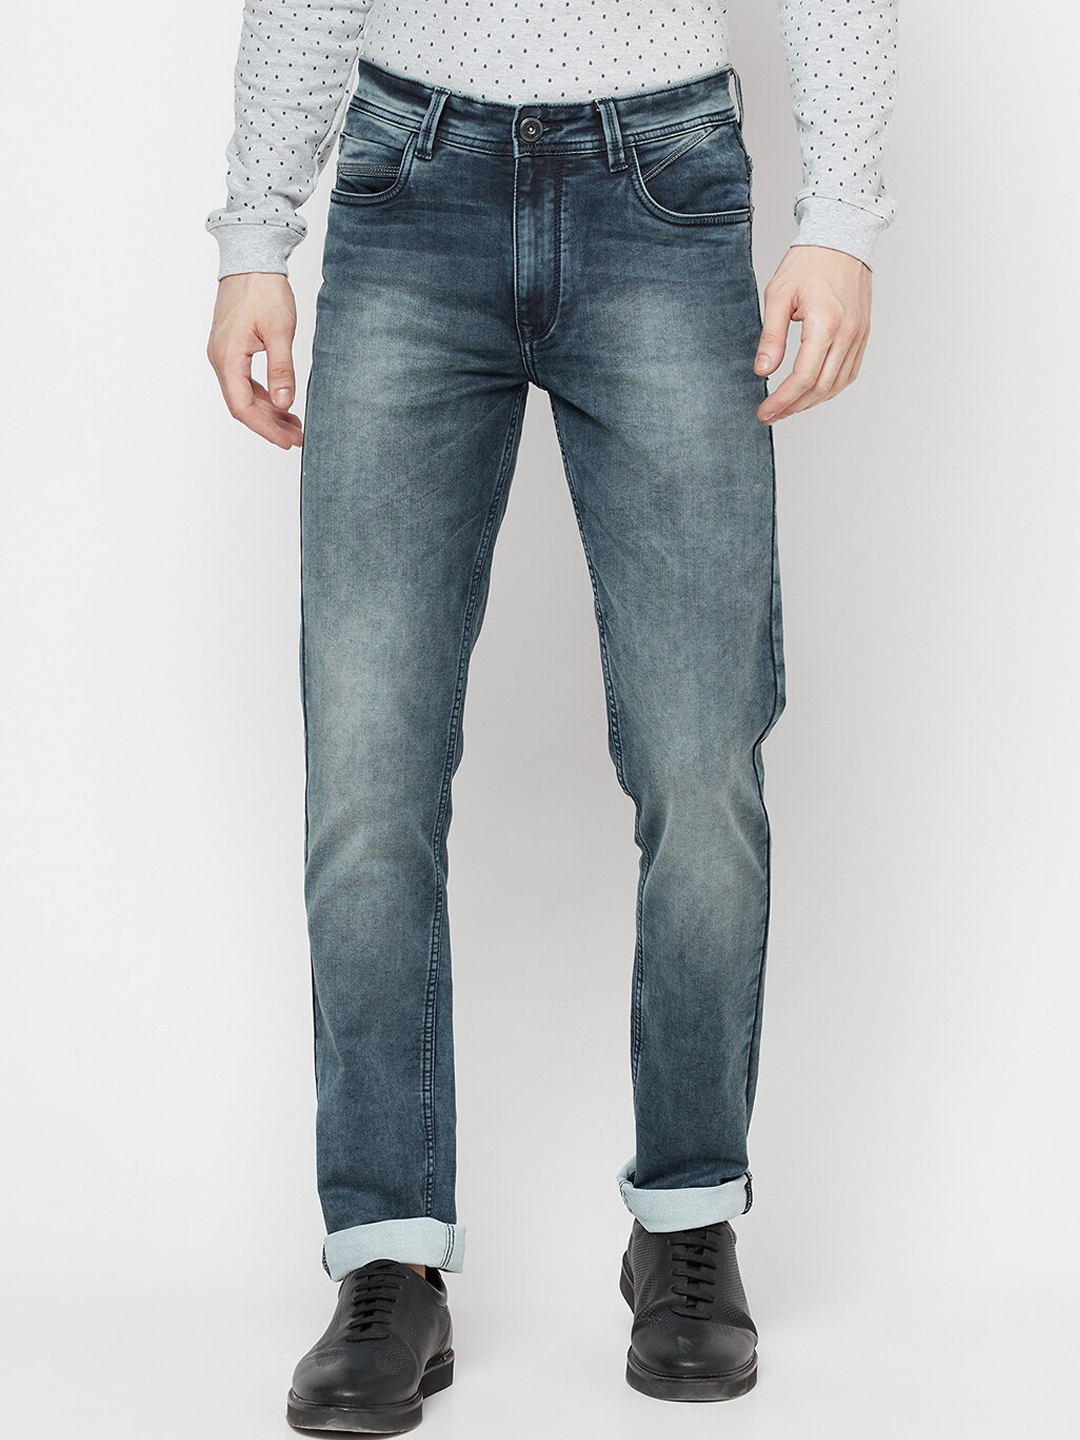 Buy Octave Men Navy Blue Light Fade Jeans - Jeans for Men 15836530 | Myntra